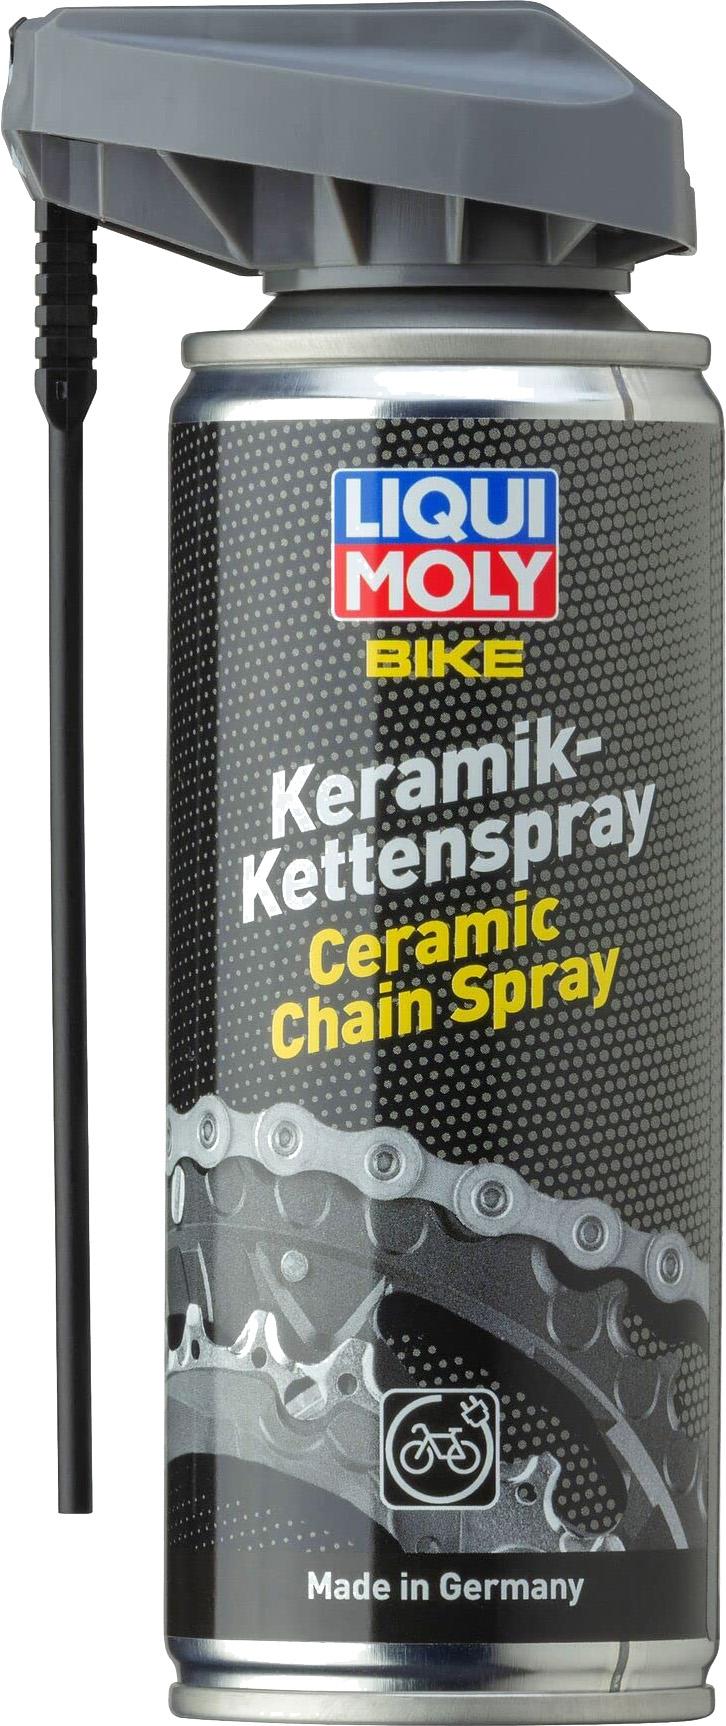 Liqui Moly Bike Ceramic Spray 200 ml chain lube